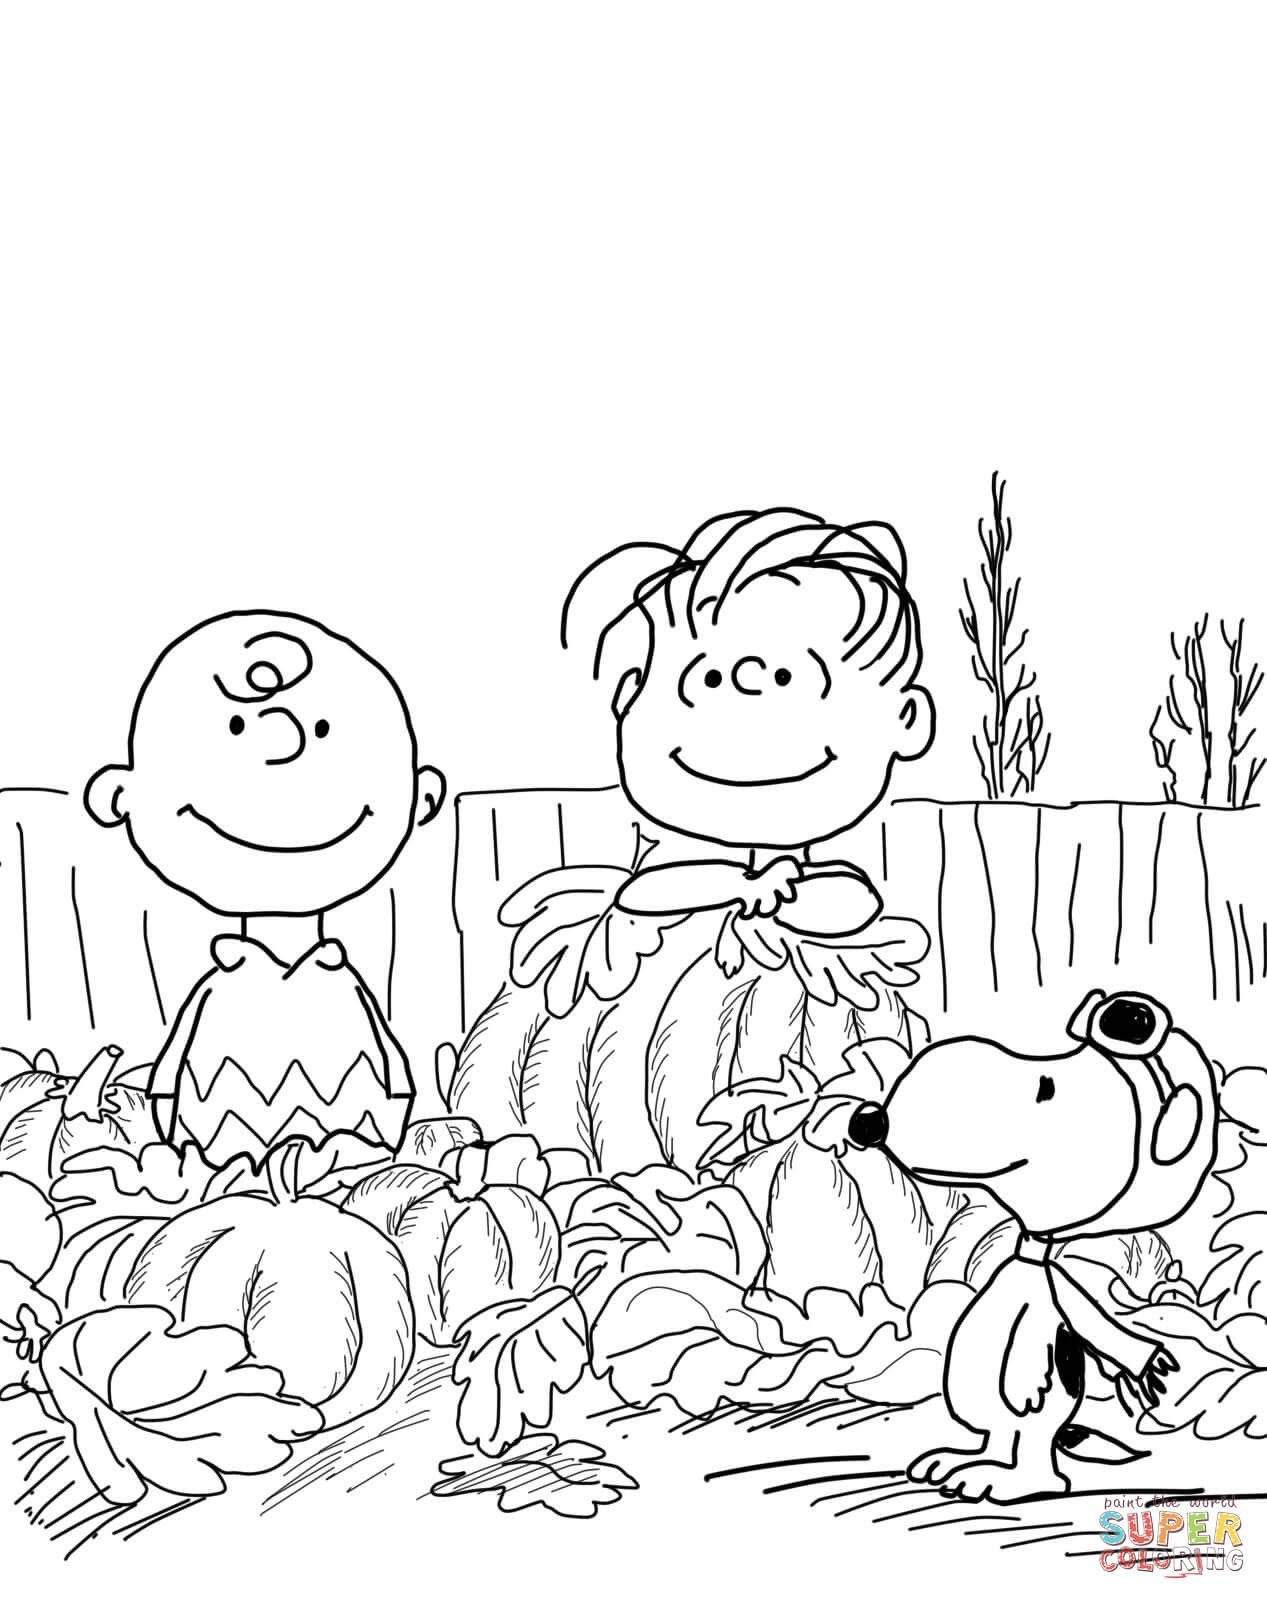 Awesome Free Printable Charlie Brown Halloween Coloring Pages - Free Printable Charlie Brown Halloween Coloring Pages